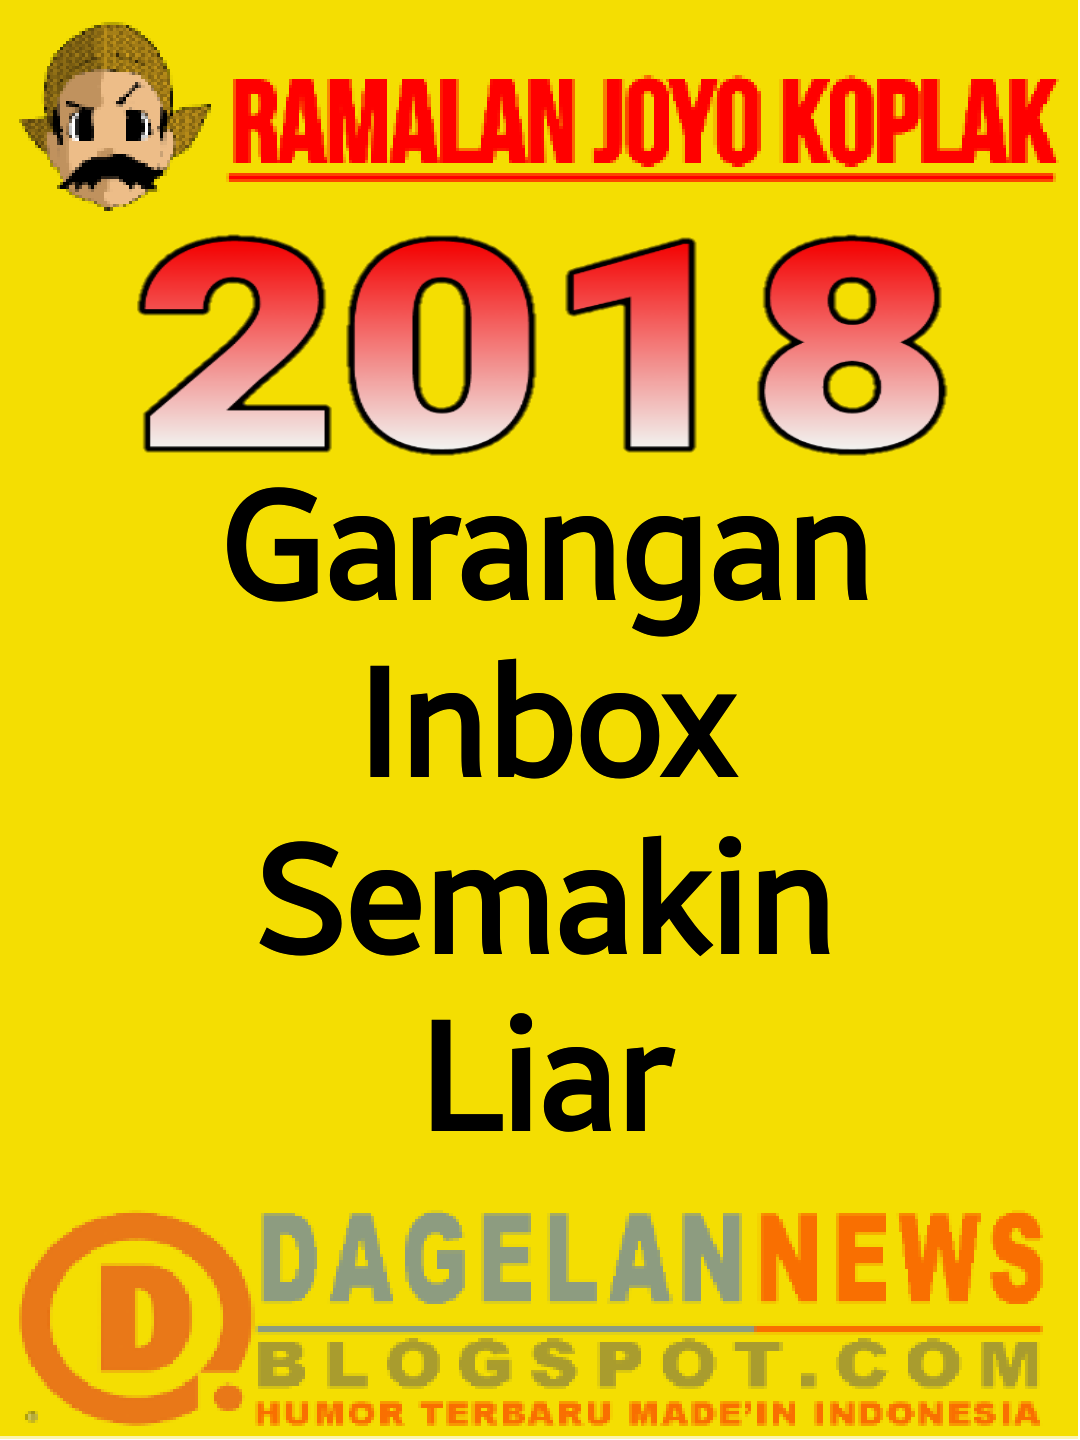 RAMALAN LUCU DI TAHUN 2018 DAGELAN NEWS